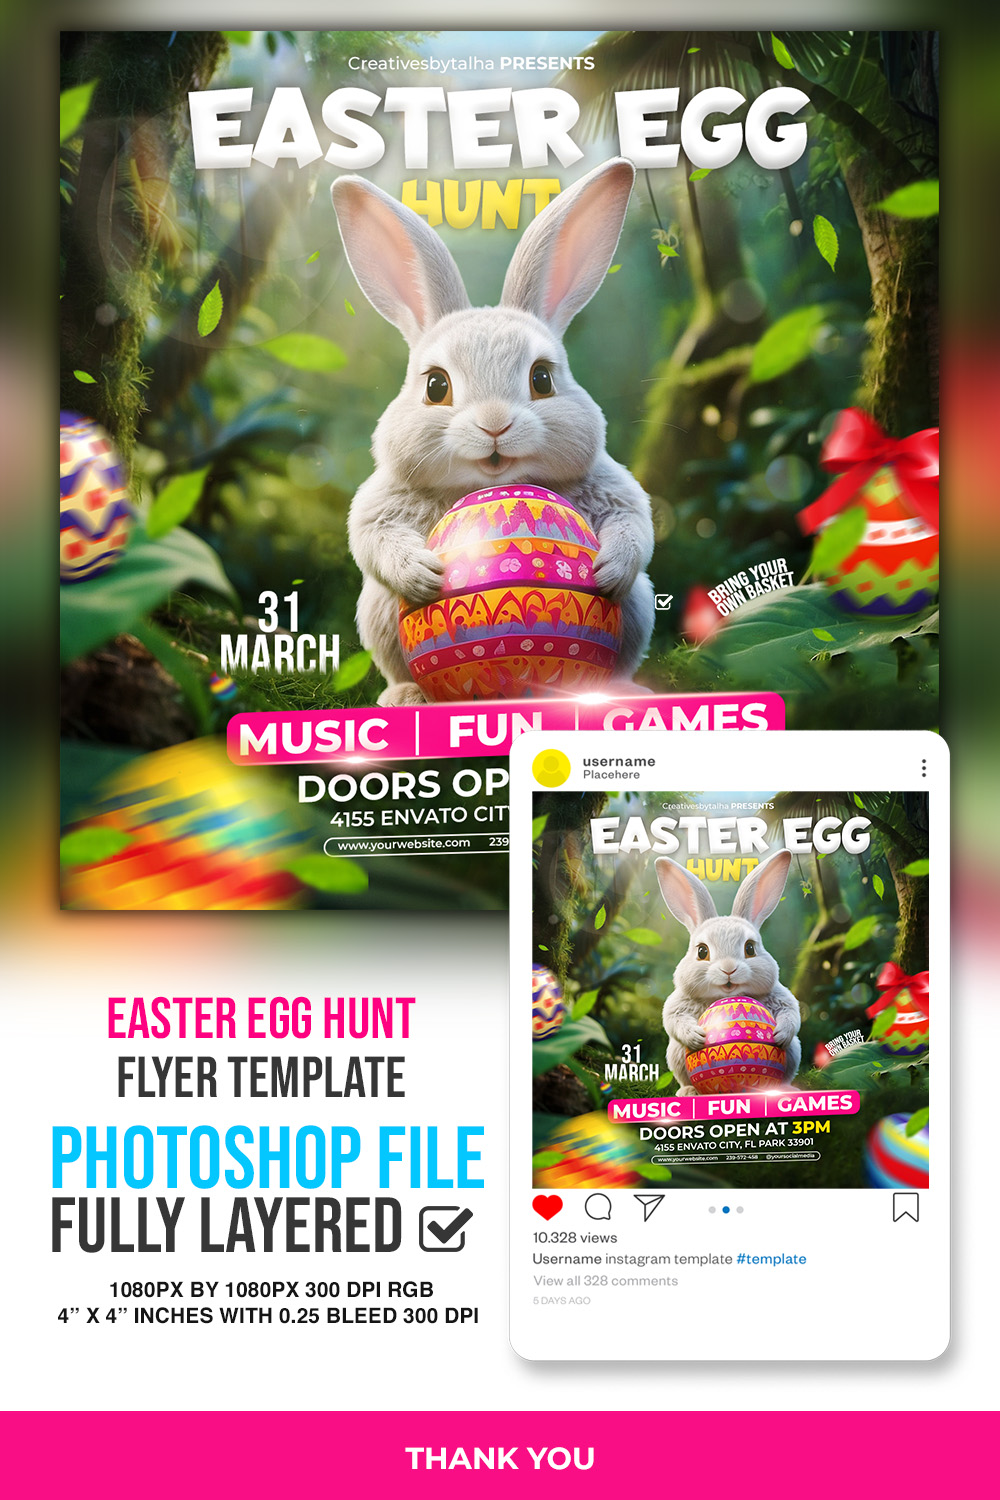 Easter Egg Hunt Event Flyer Template pinterest preview image.